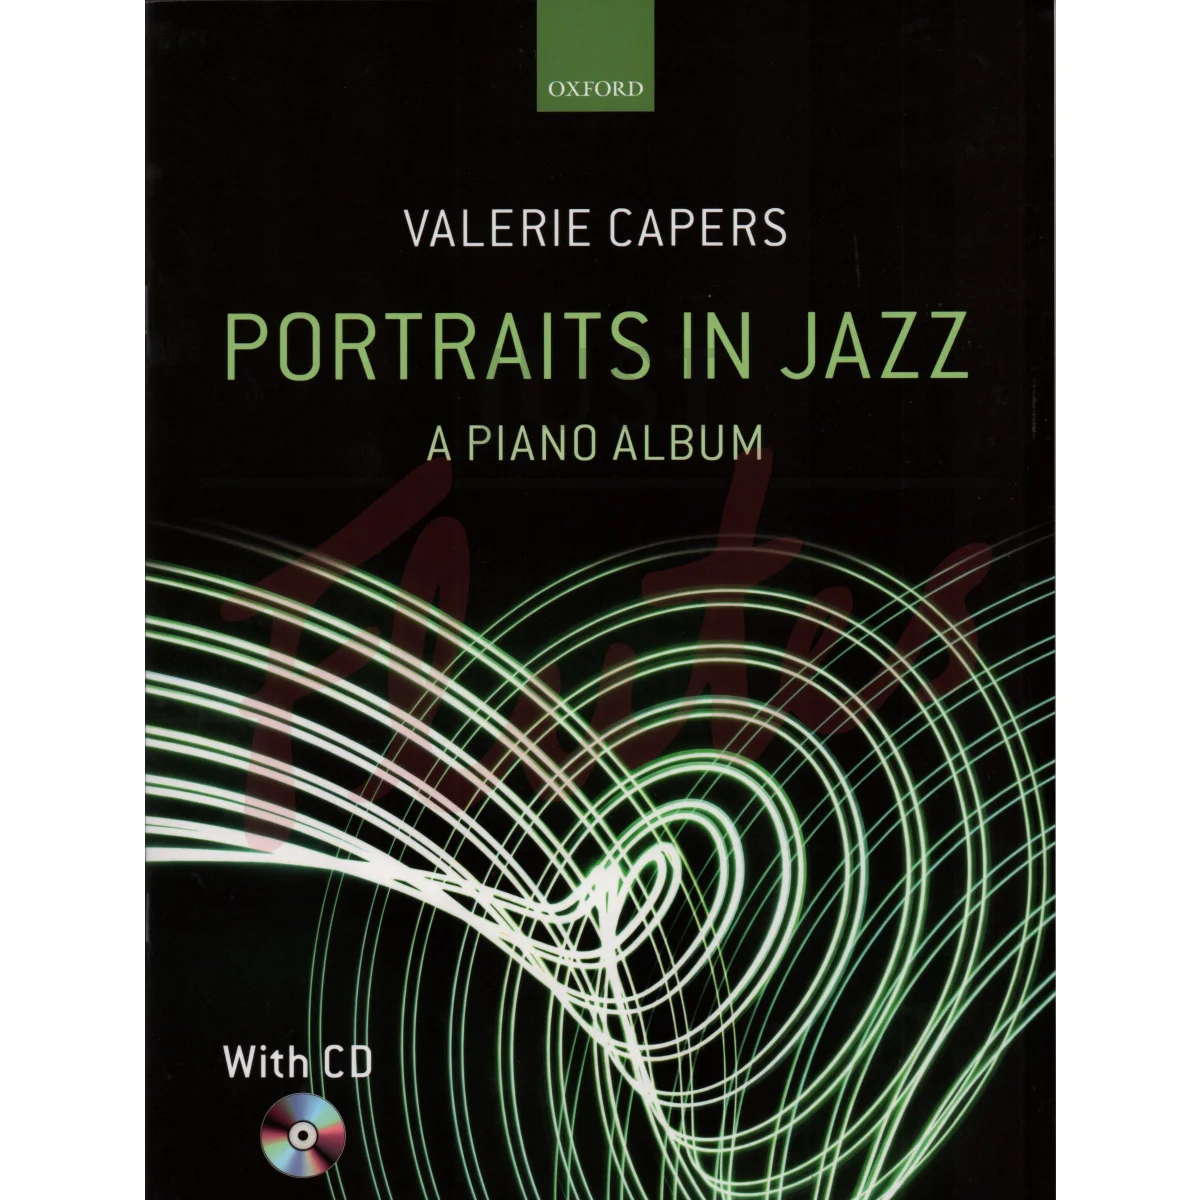 Portraits in Jazz - A Piano Album